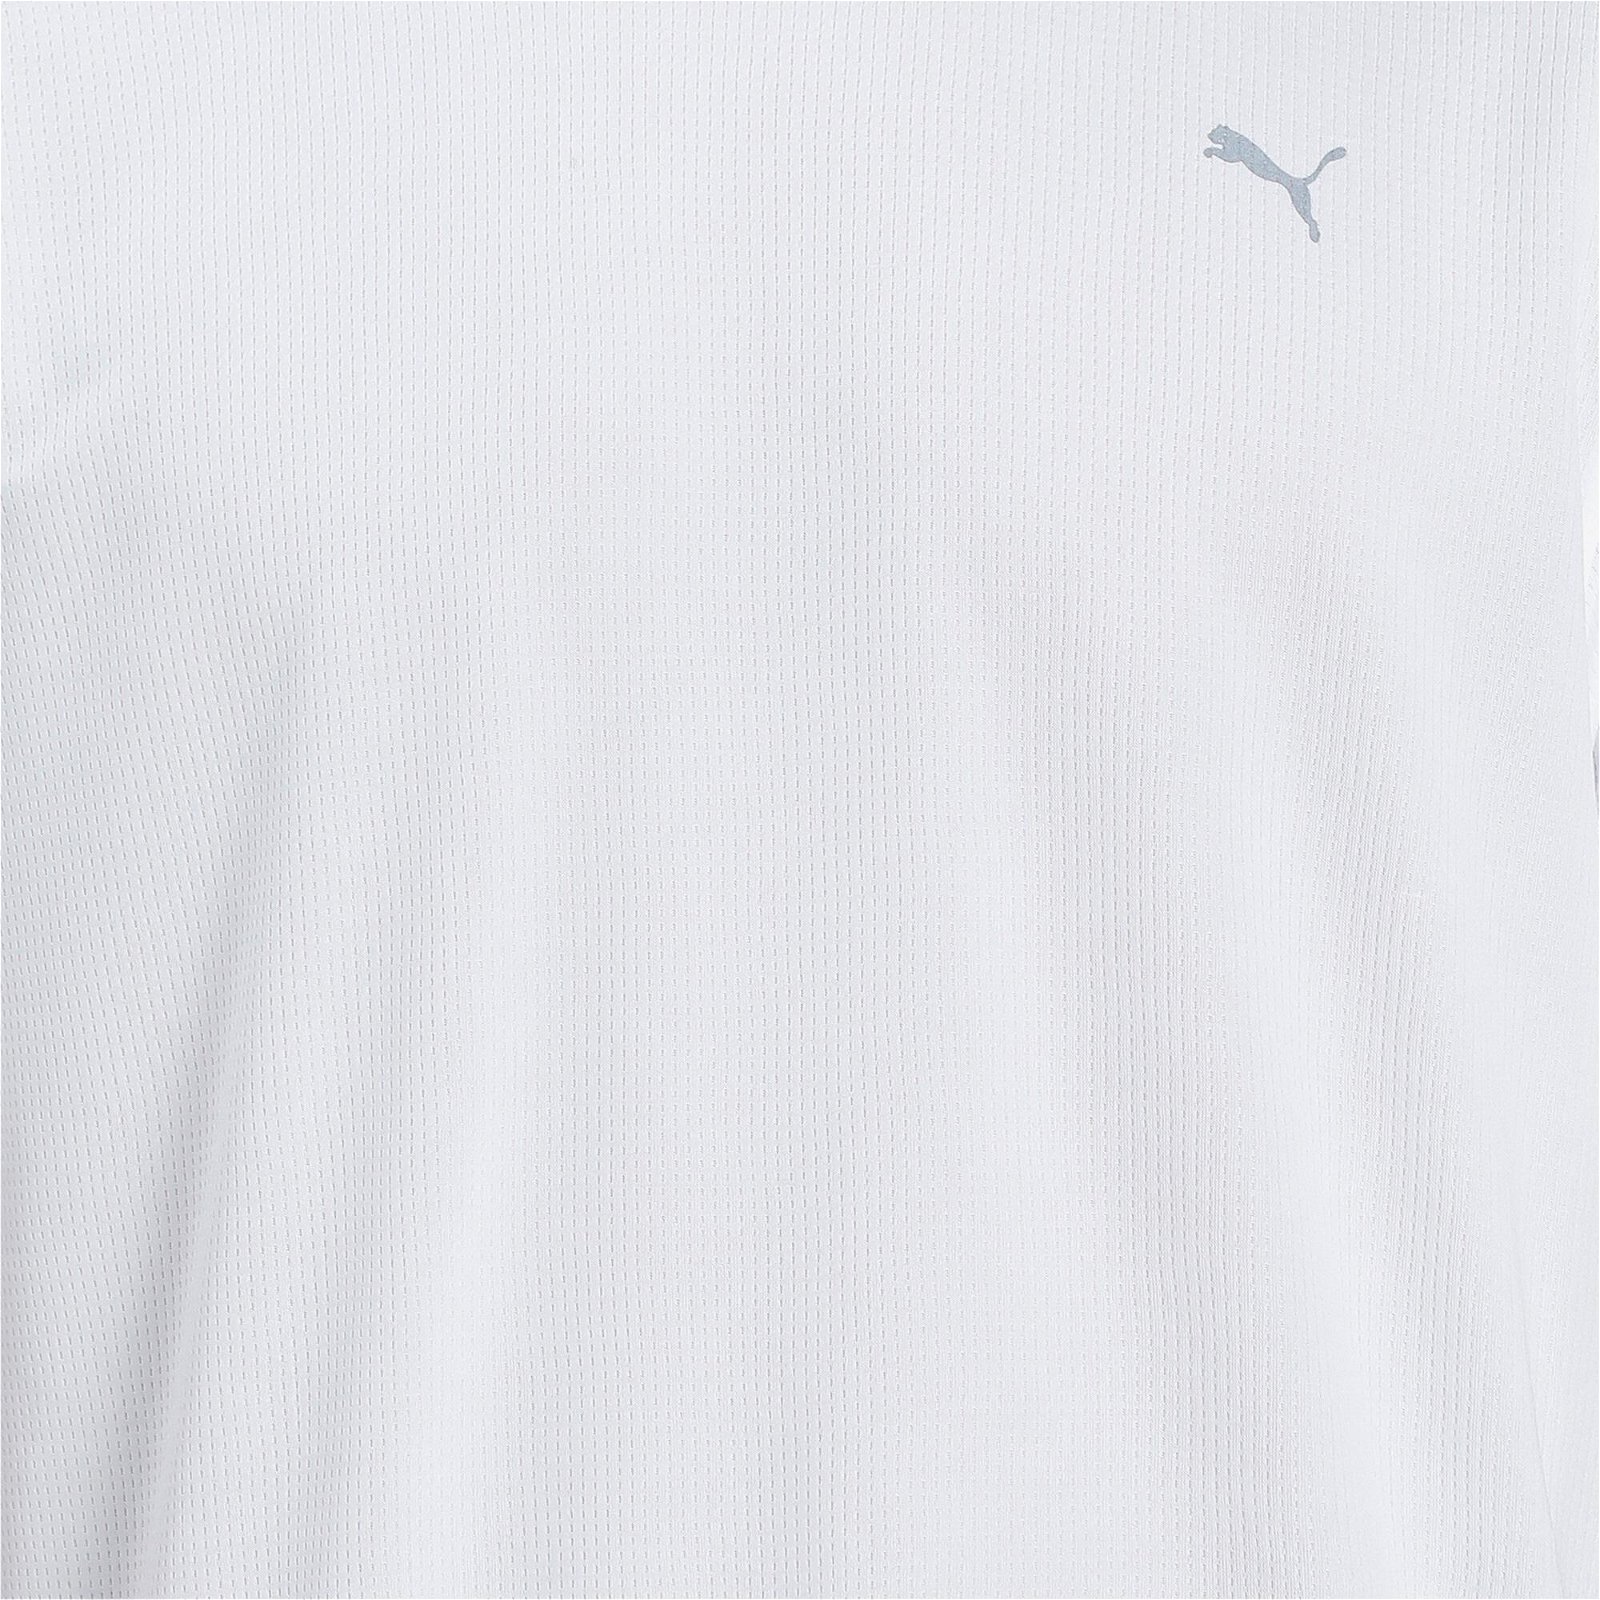 Puma Performance Erkek Beyaz T-Shirt